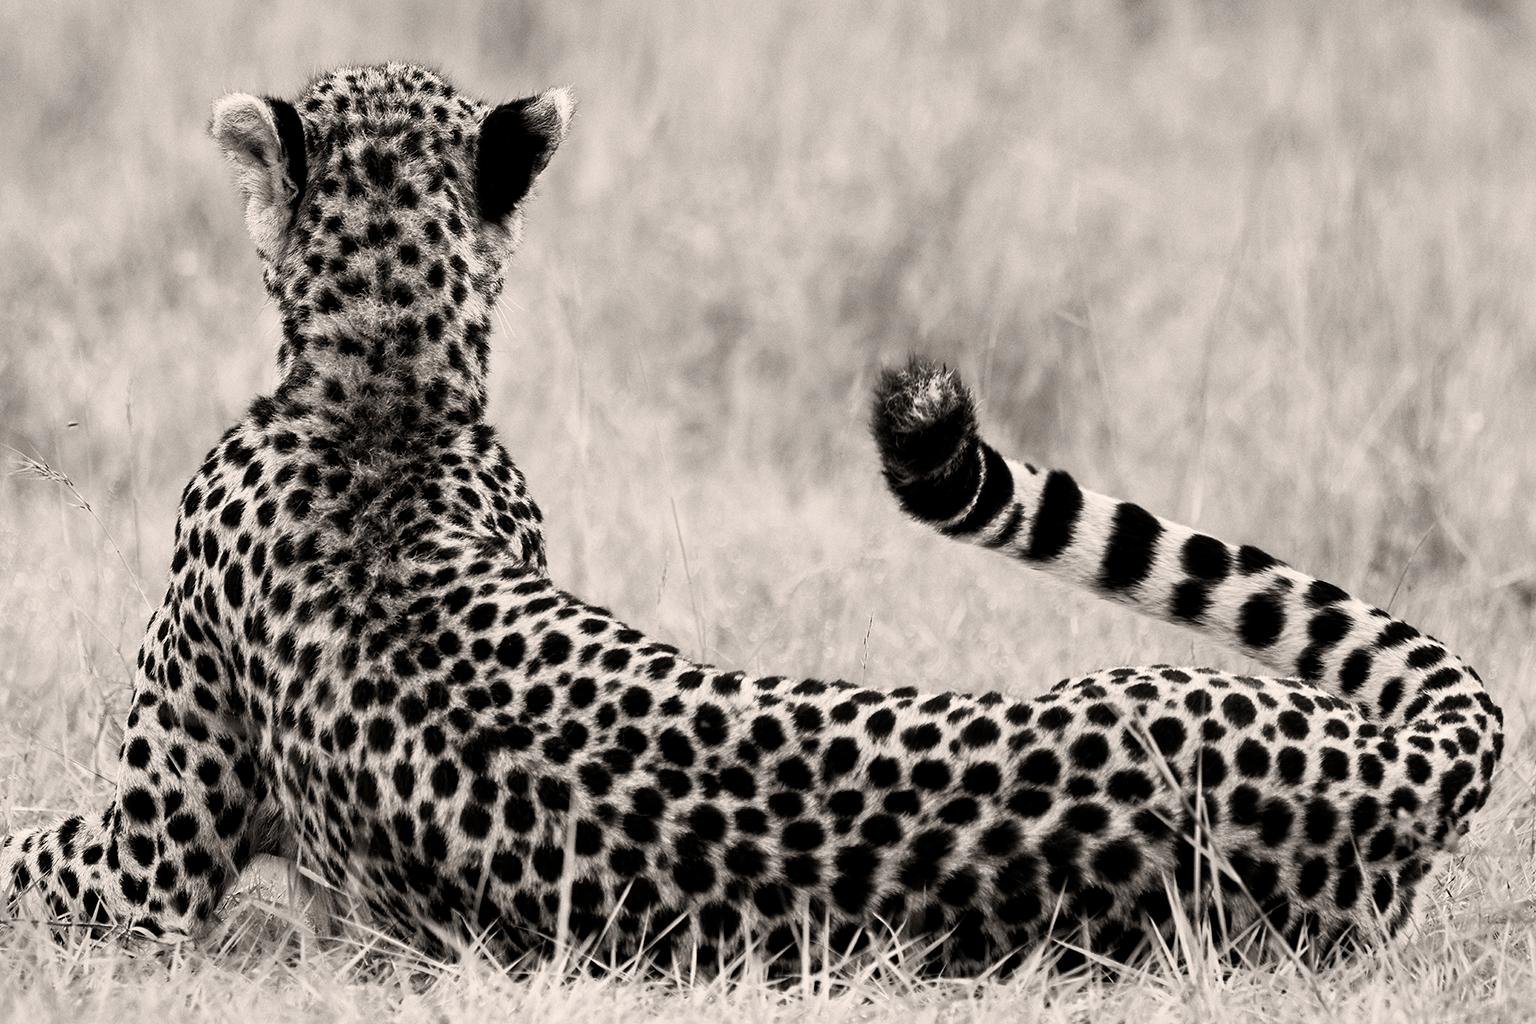 Joachim Schmeisser Portrait Photograph - The Divine, animal, black and white photography, cheetah, africa